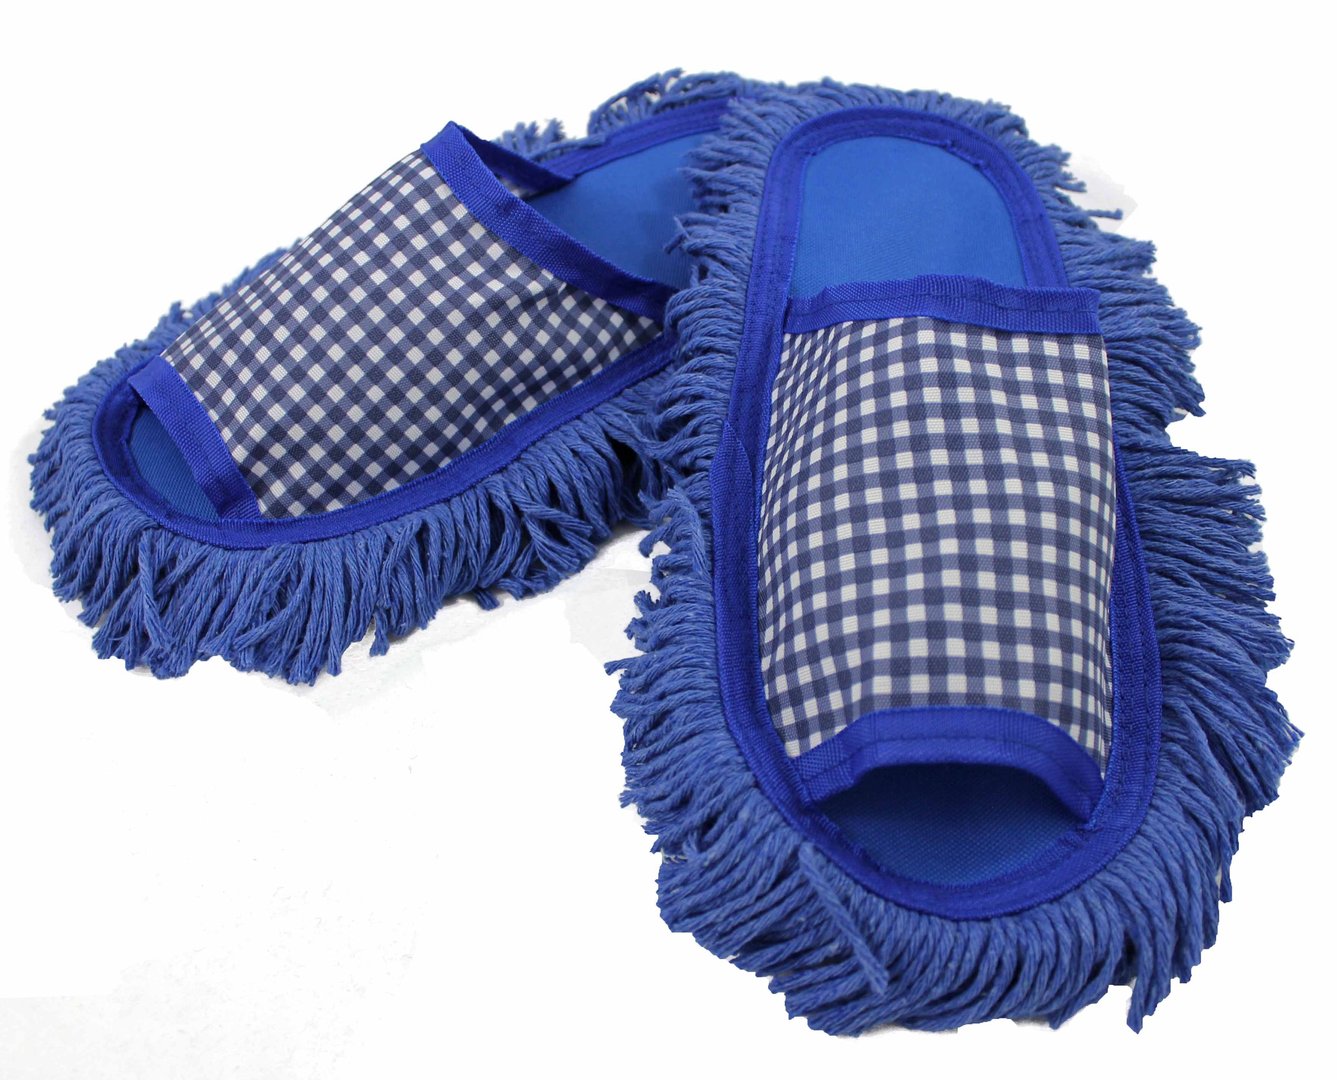 Hausschuhe Mop Schuhe In Blau Baumwolle Sohle Size 40 43